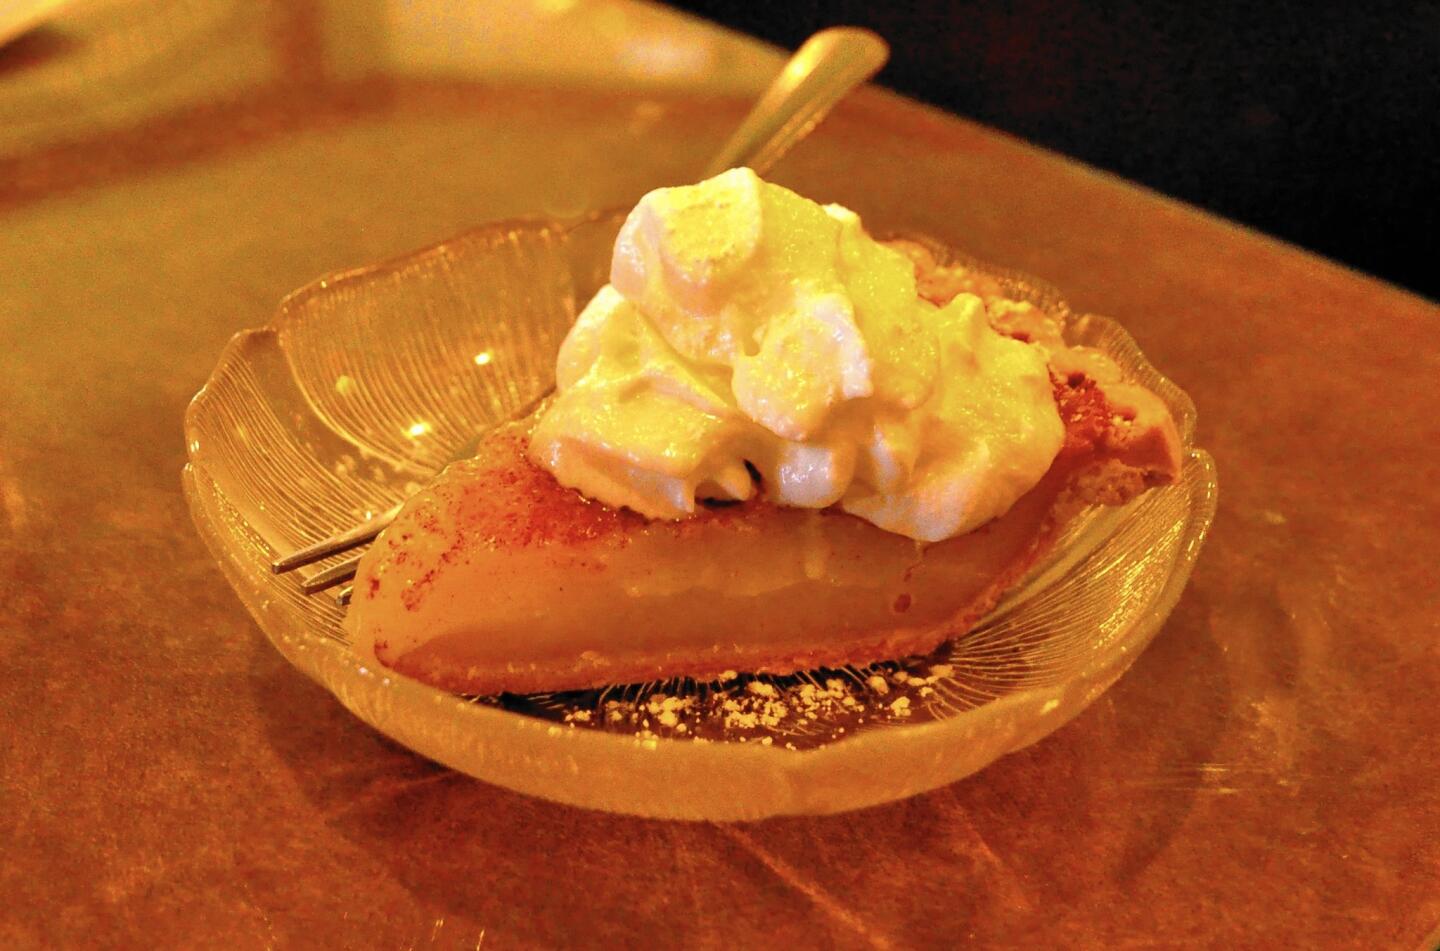 Sugar cream pie, also called Hoosier pie and Amish pie, can be found on dessert menus across Indiana.